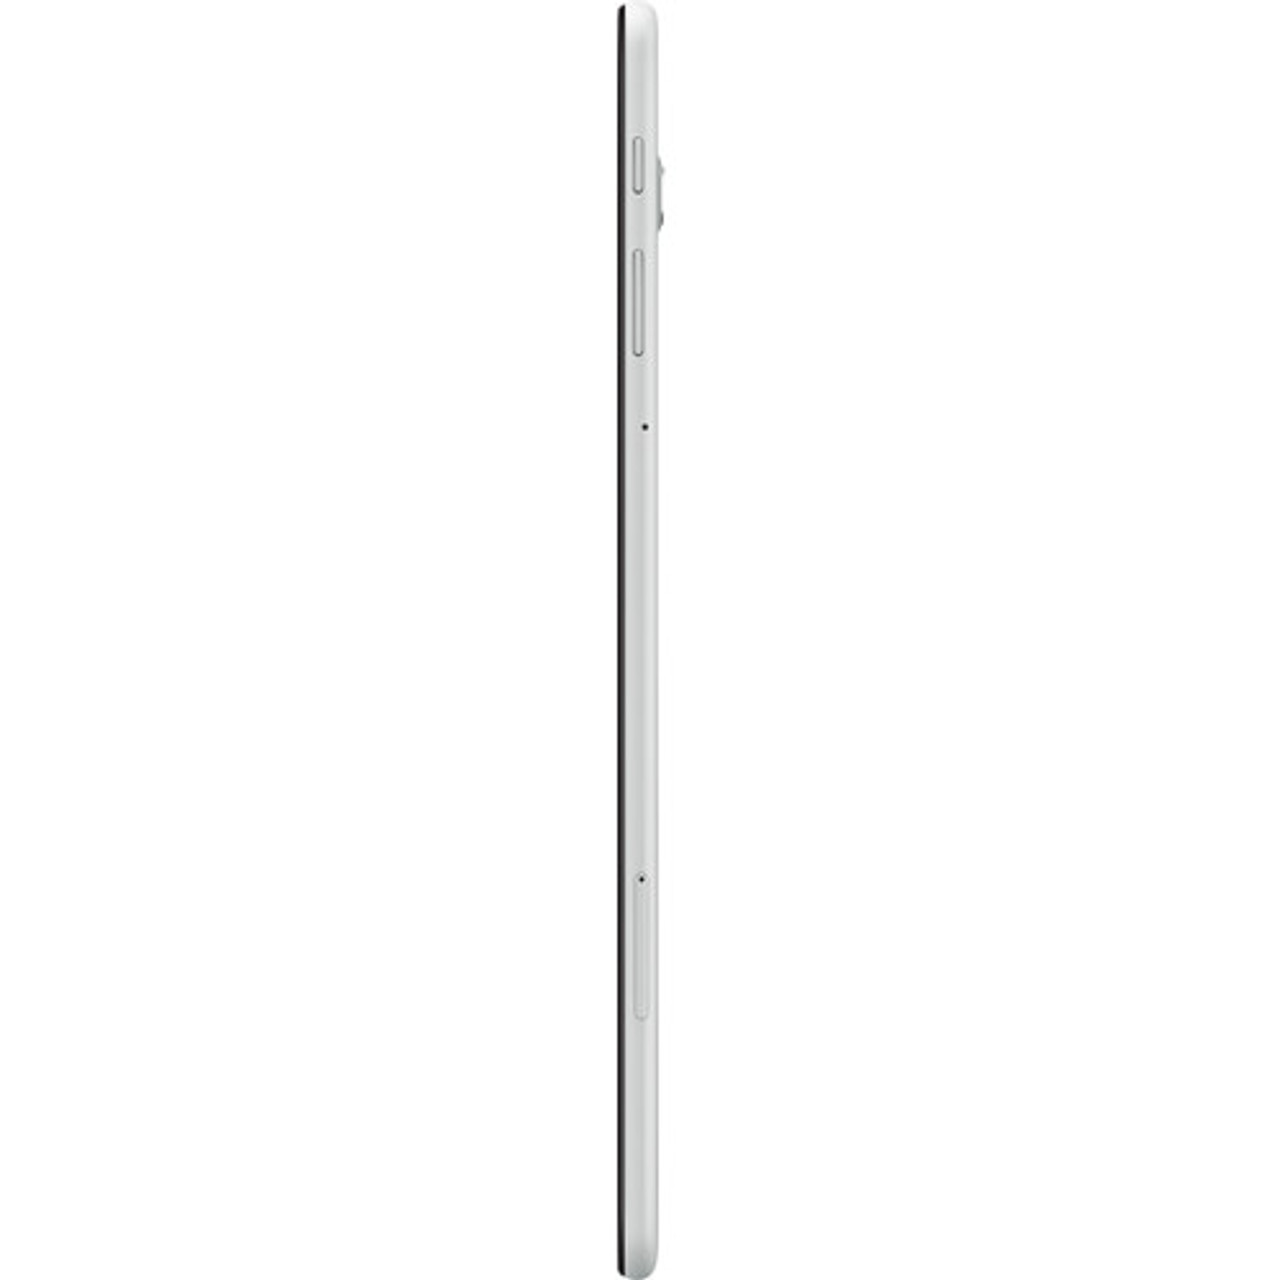 Samsung SM-T590NZAAXAR-RB 10.5" Galaxy Tab A 32GB WiFi Tablet Grey -  Certified Refurbished - Deal Parade